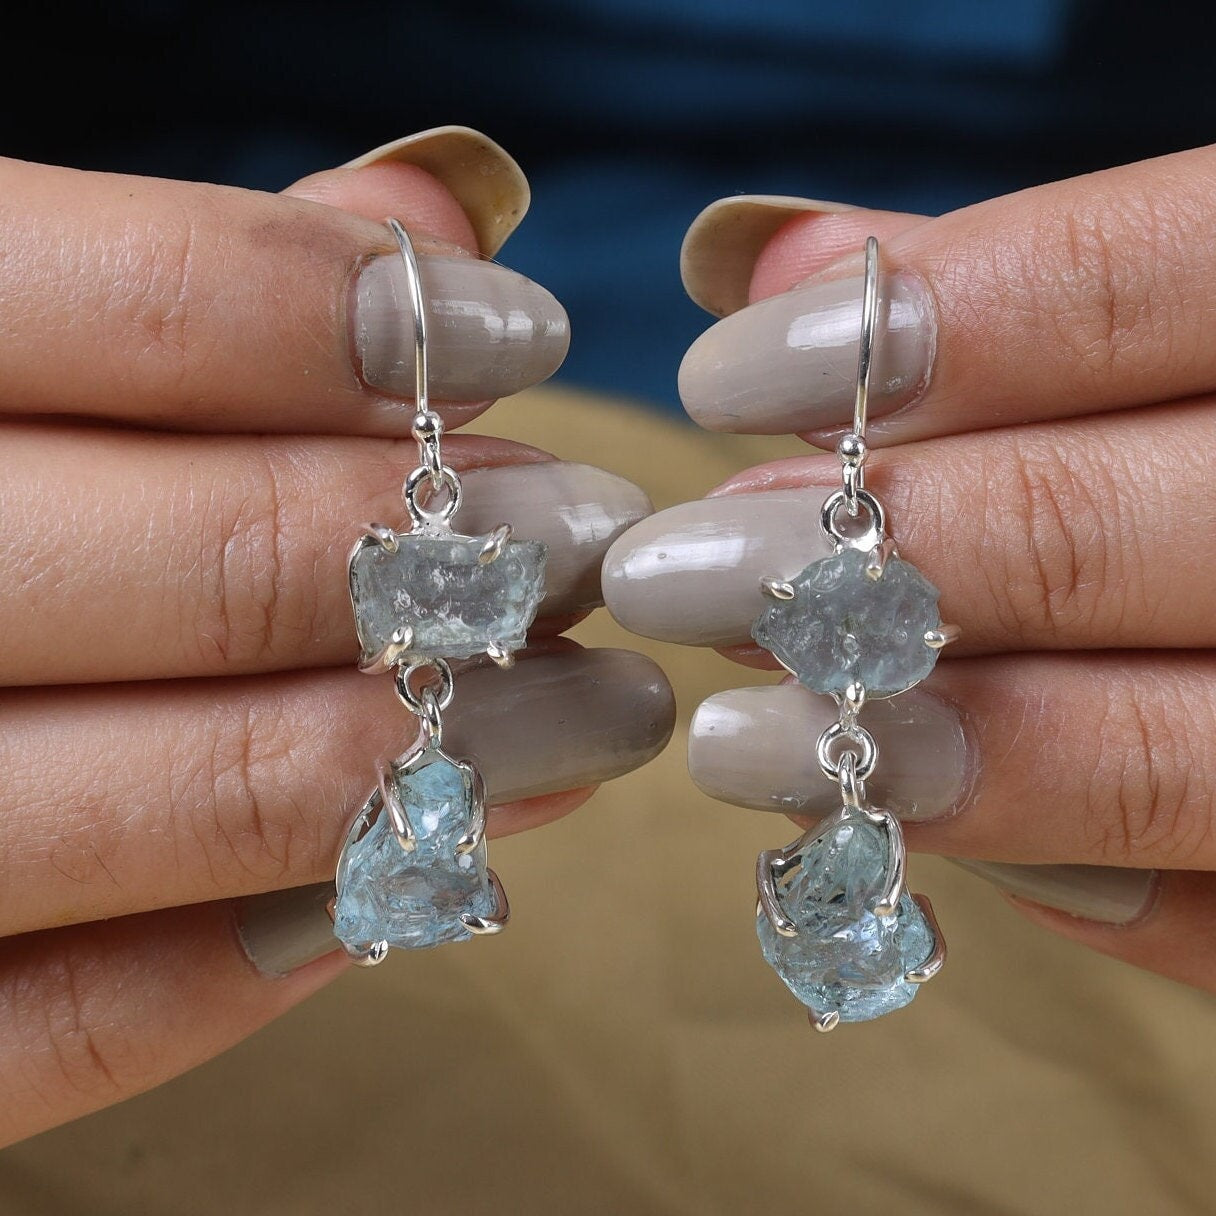 Raw Aquamarine Earrings, 925 Sterling Silver Earrings, Crystal Earrings, Gift for Her, Gemstone Earrings, Handmade Earrings,March Birthstone